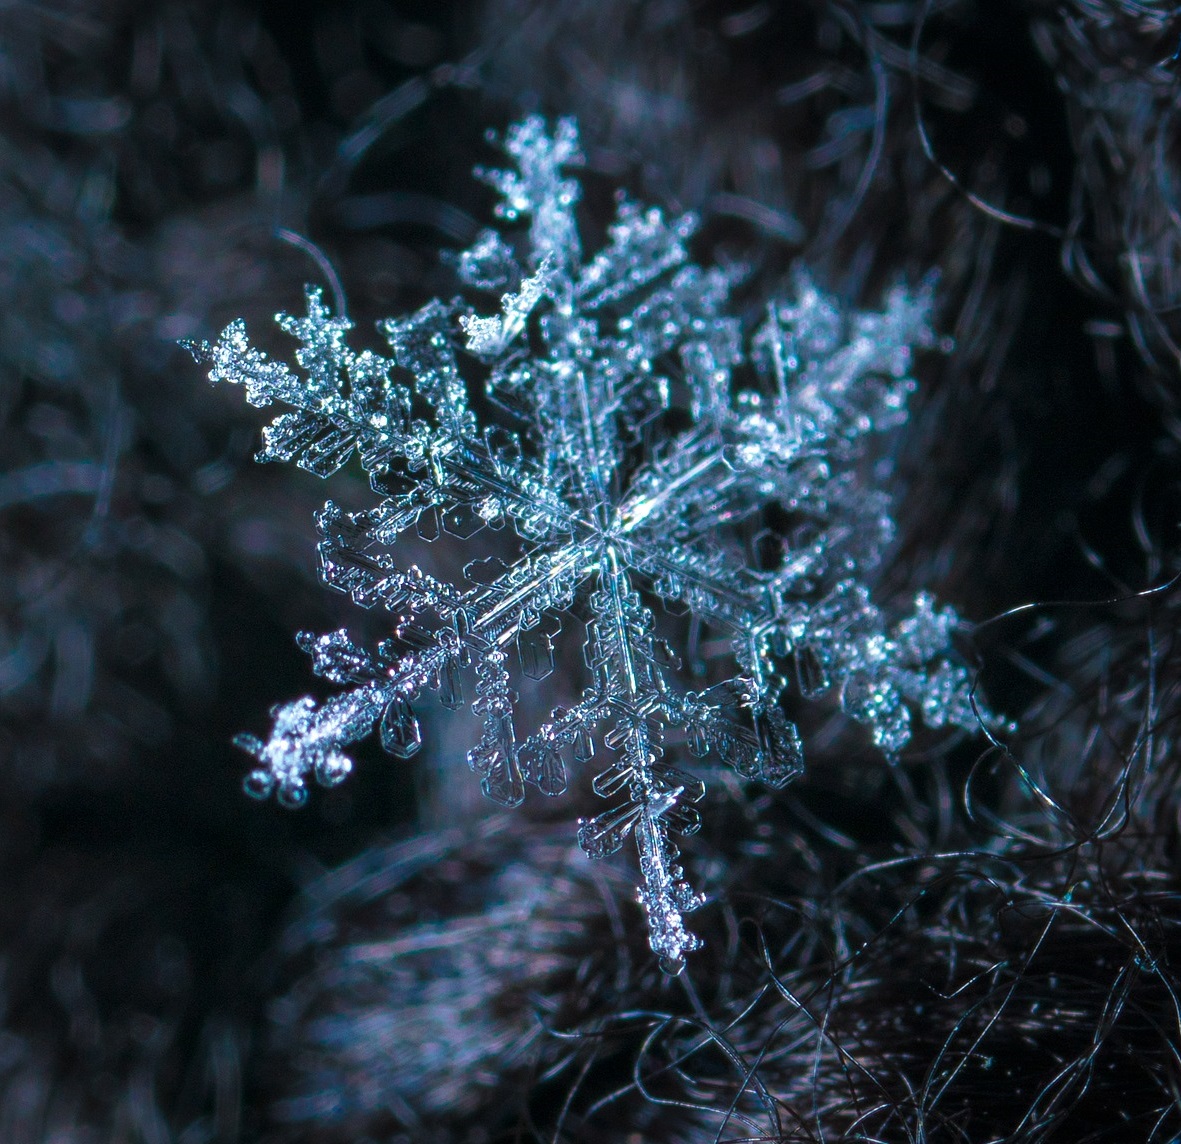 snowflake up close with macro lens